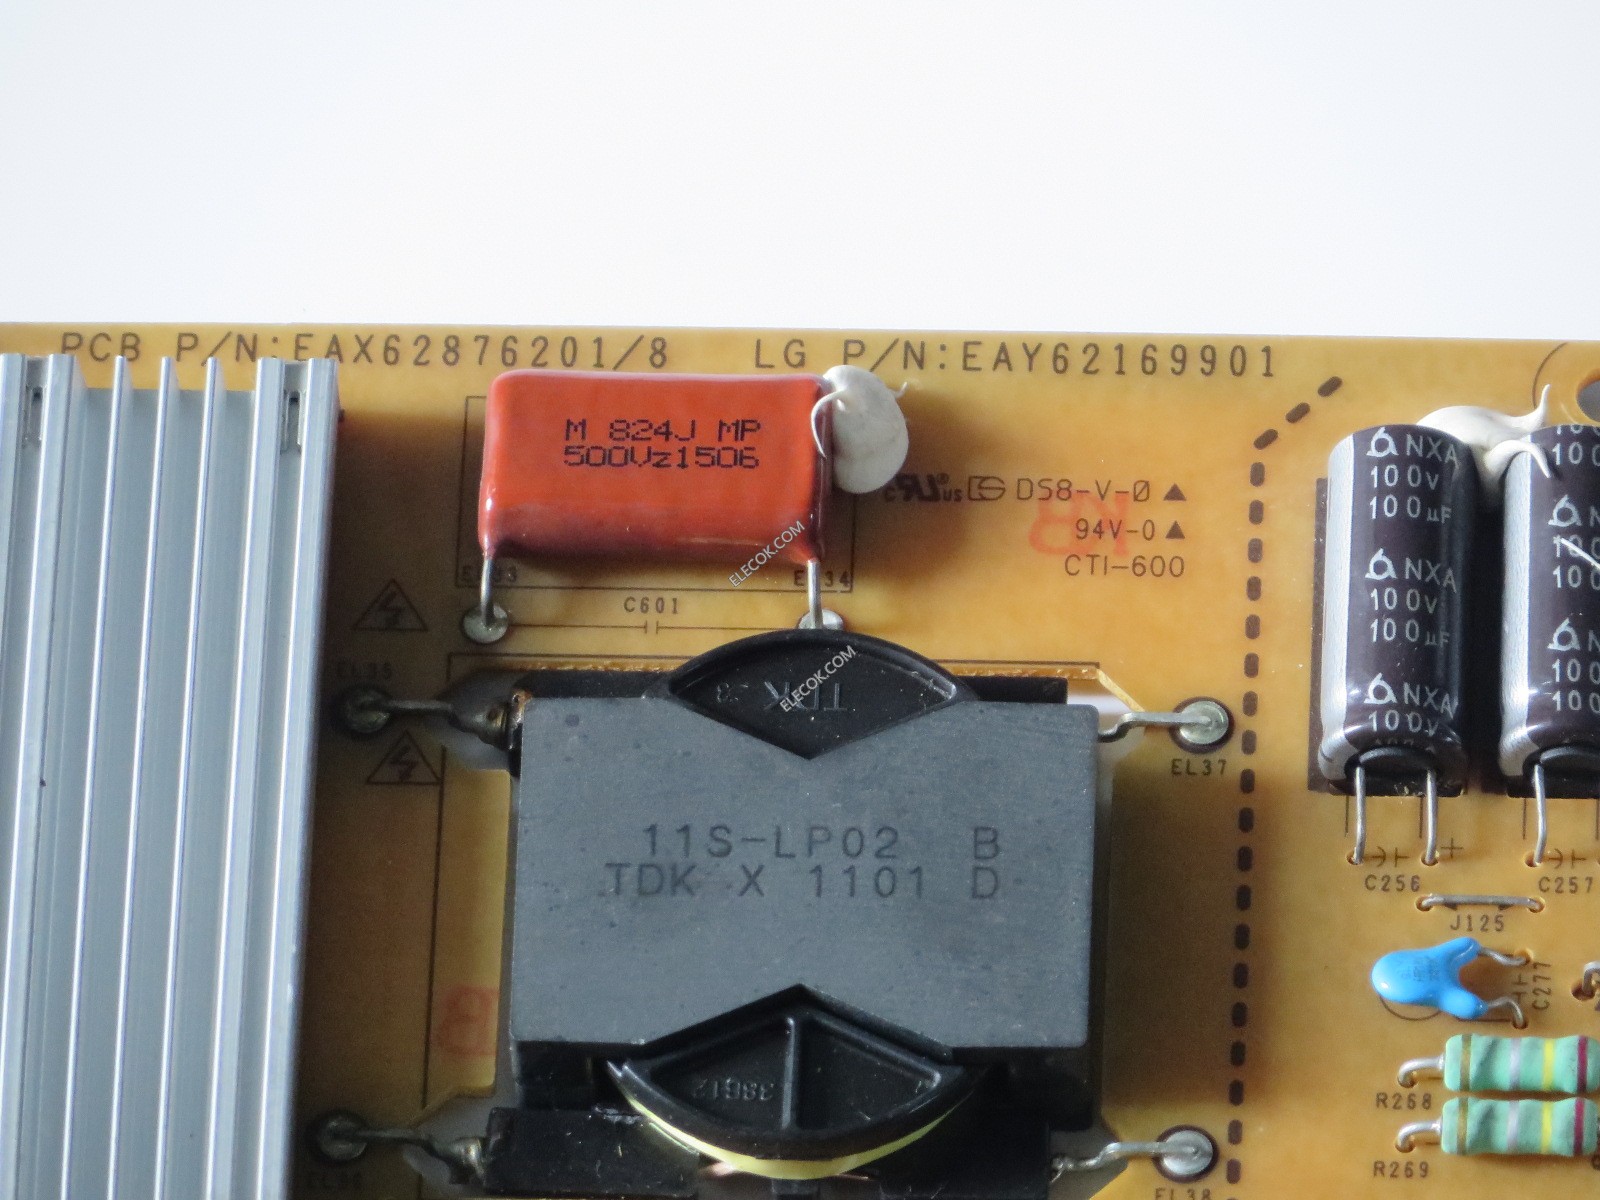 LG Original Power Supply Board 55LW LGP55-11SLPB EAY62169901 EAX62876201/9 